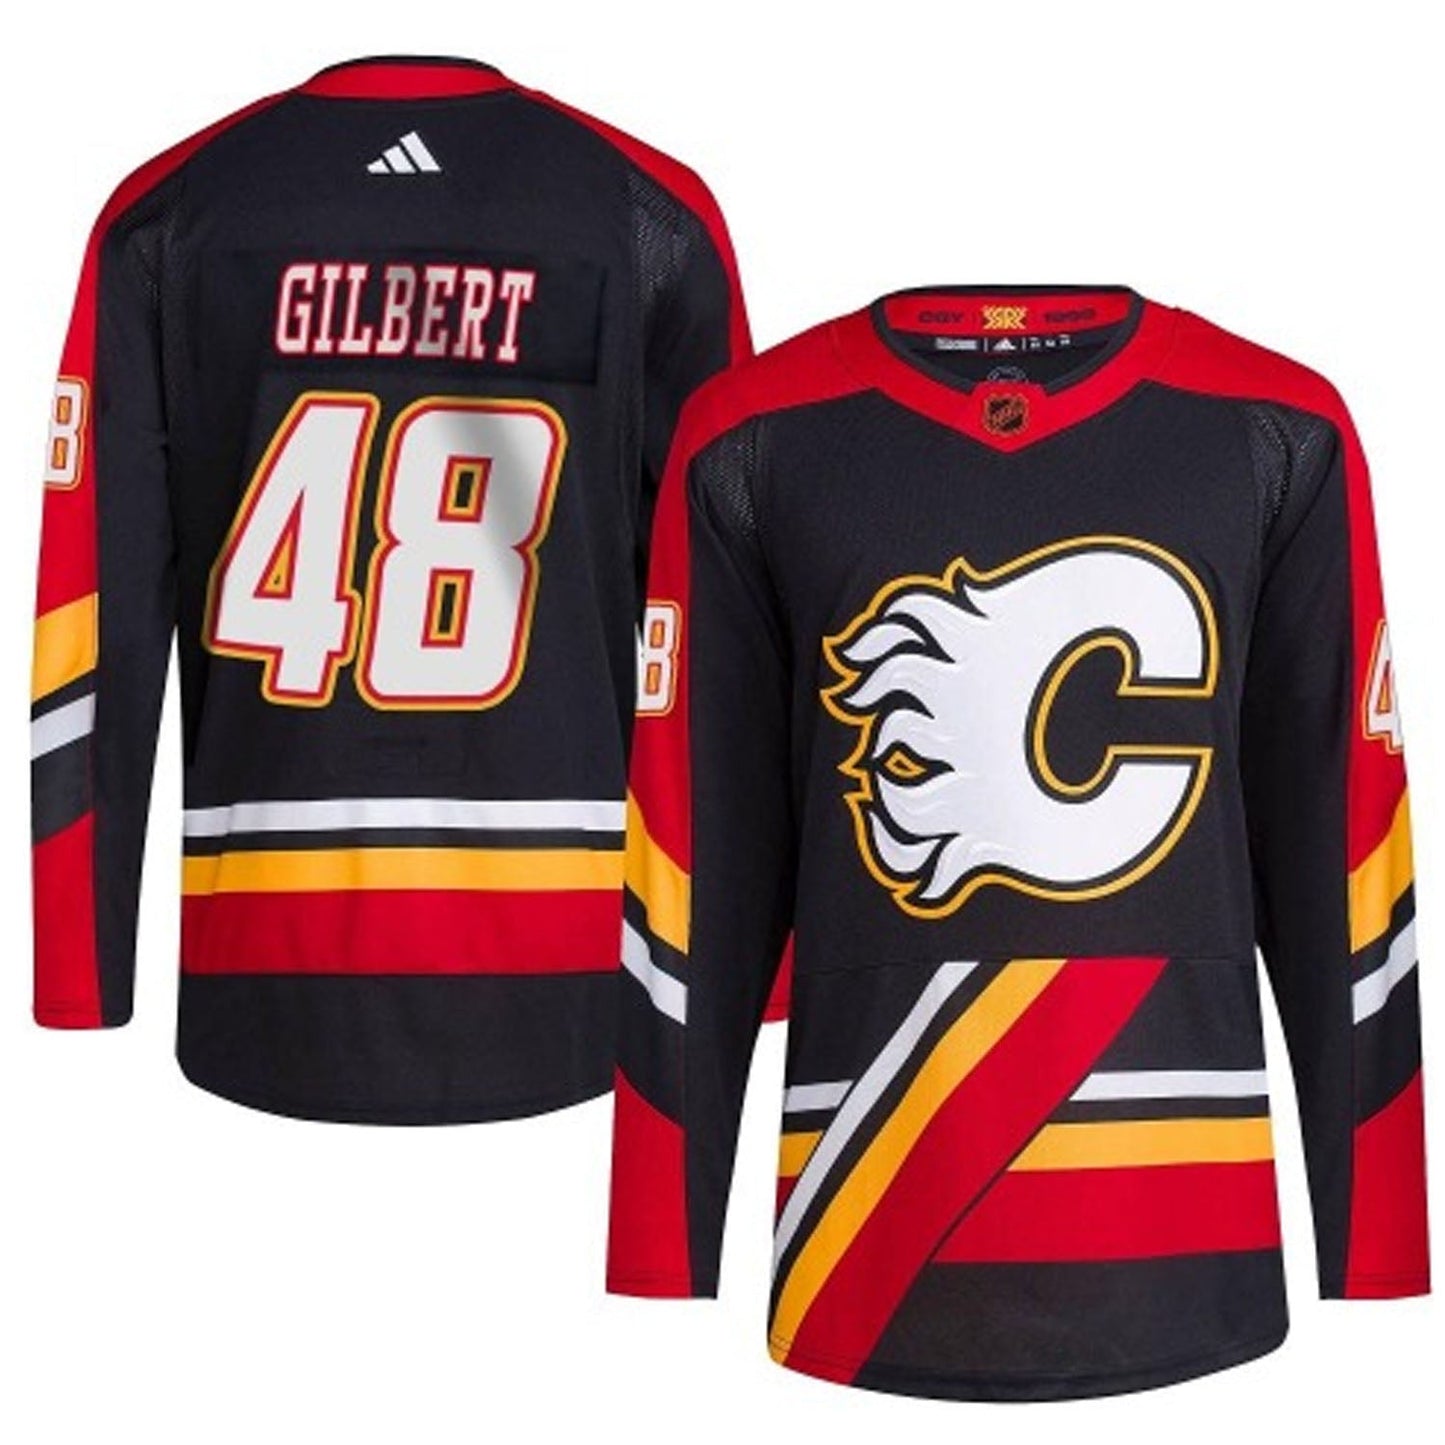 NHL Dennis Gilbert Calgary Flames 48 Jersey